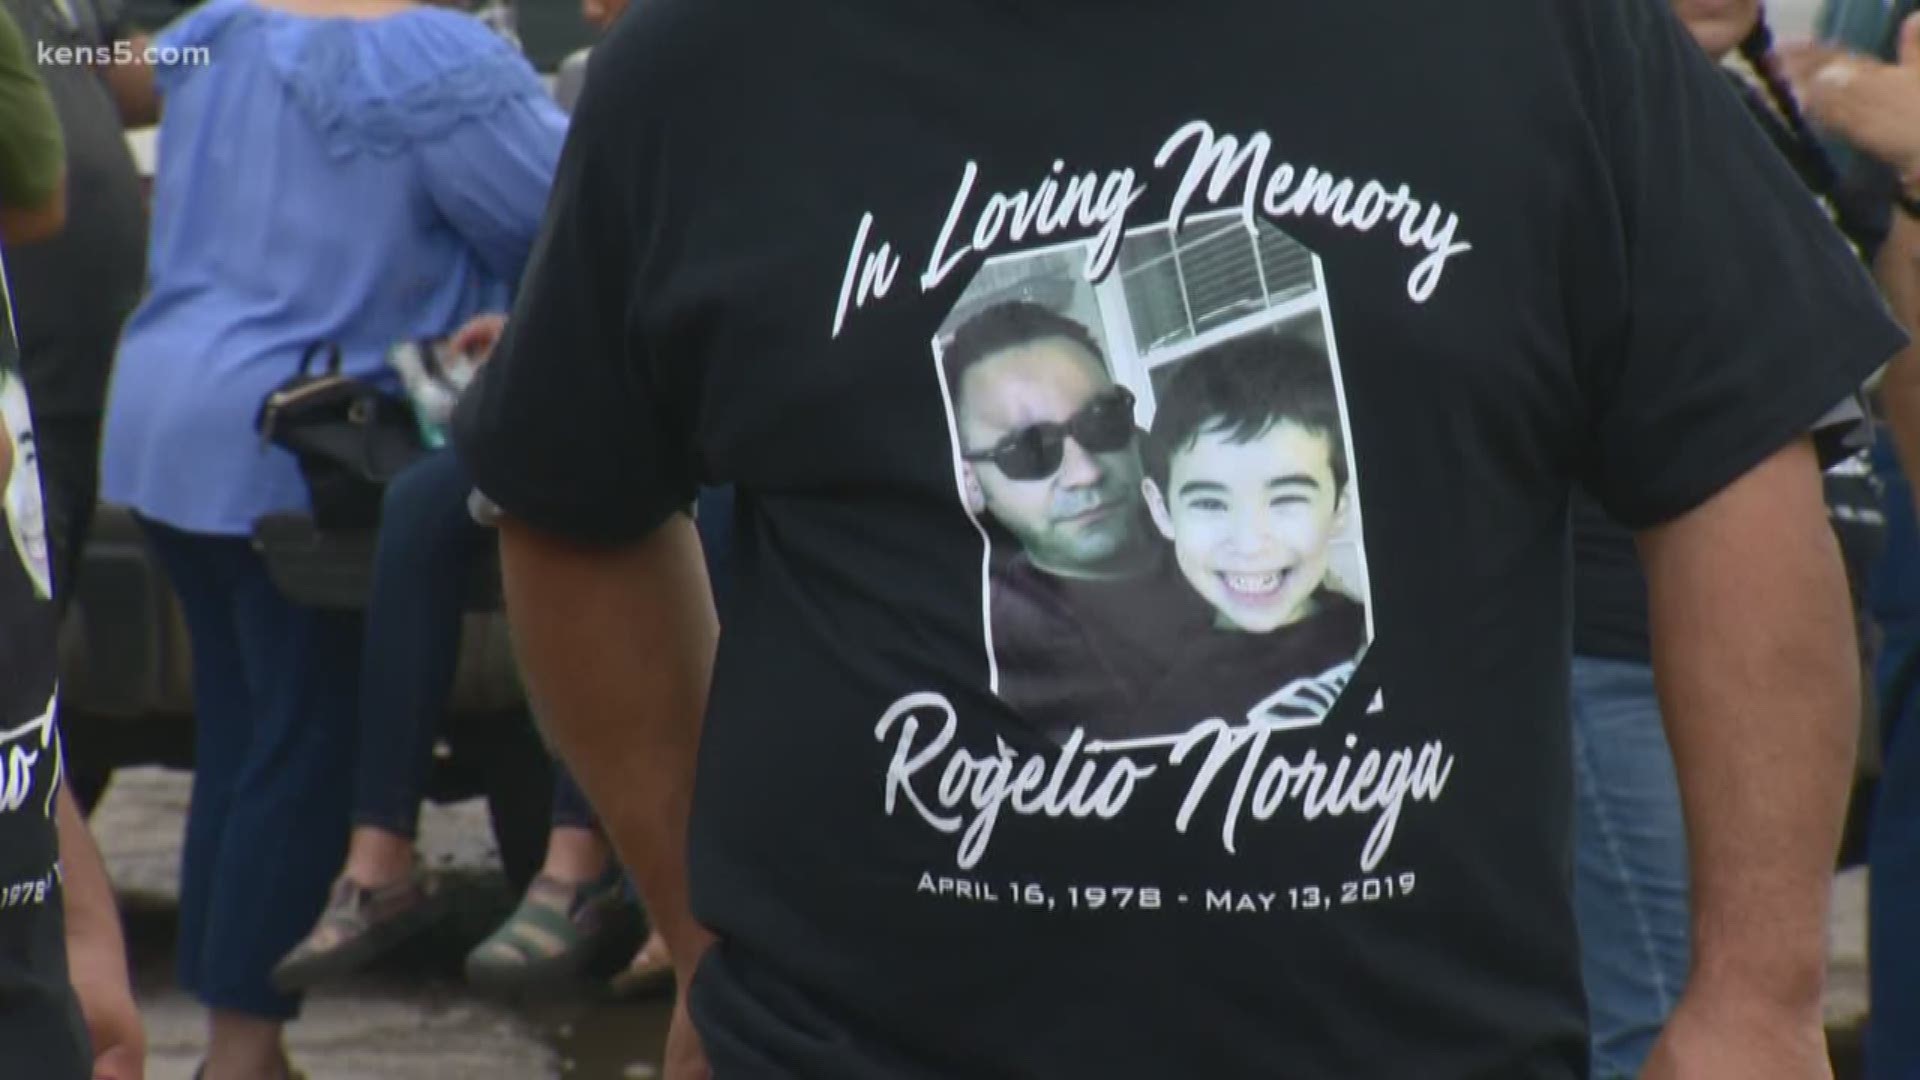 Robert Noriega was taken off life support one week ago Sunday.